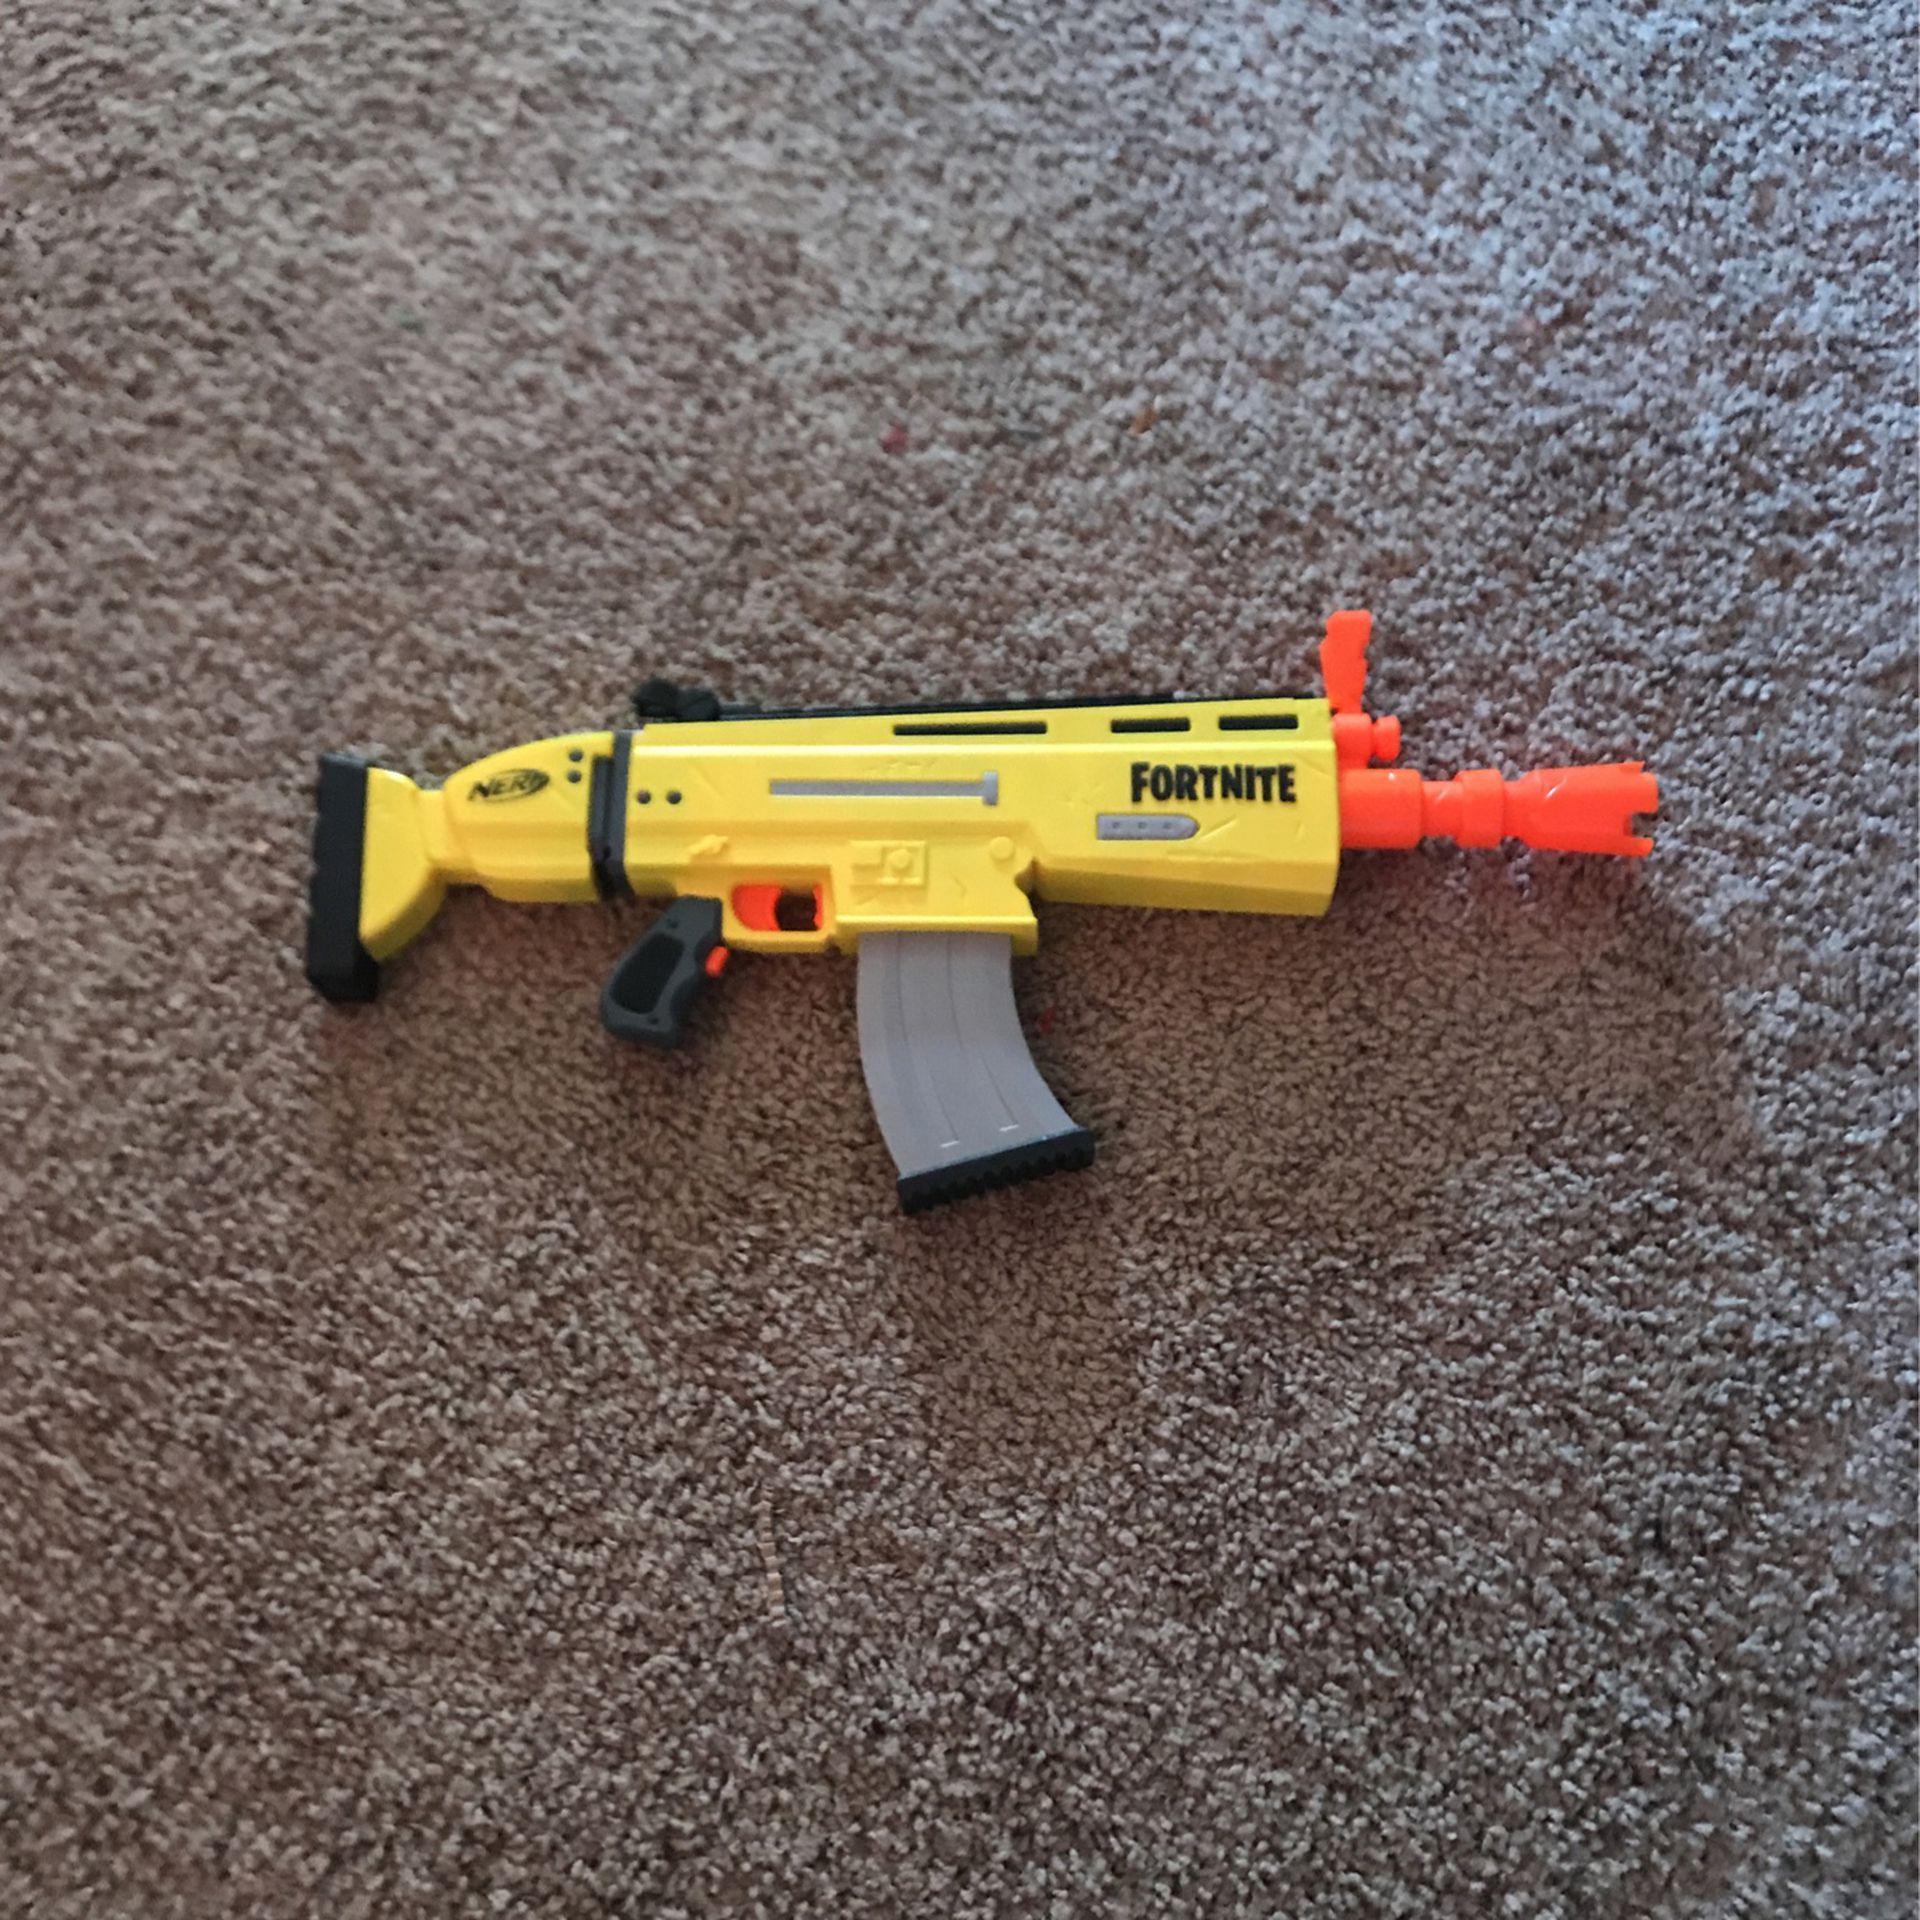 Nerf Fortnite Gun, $20